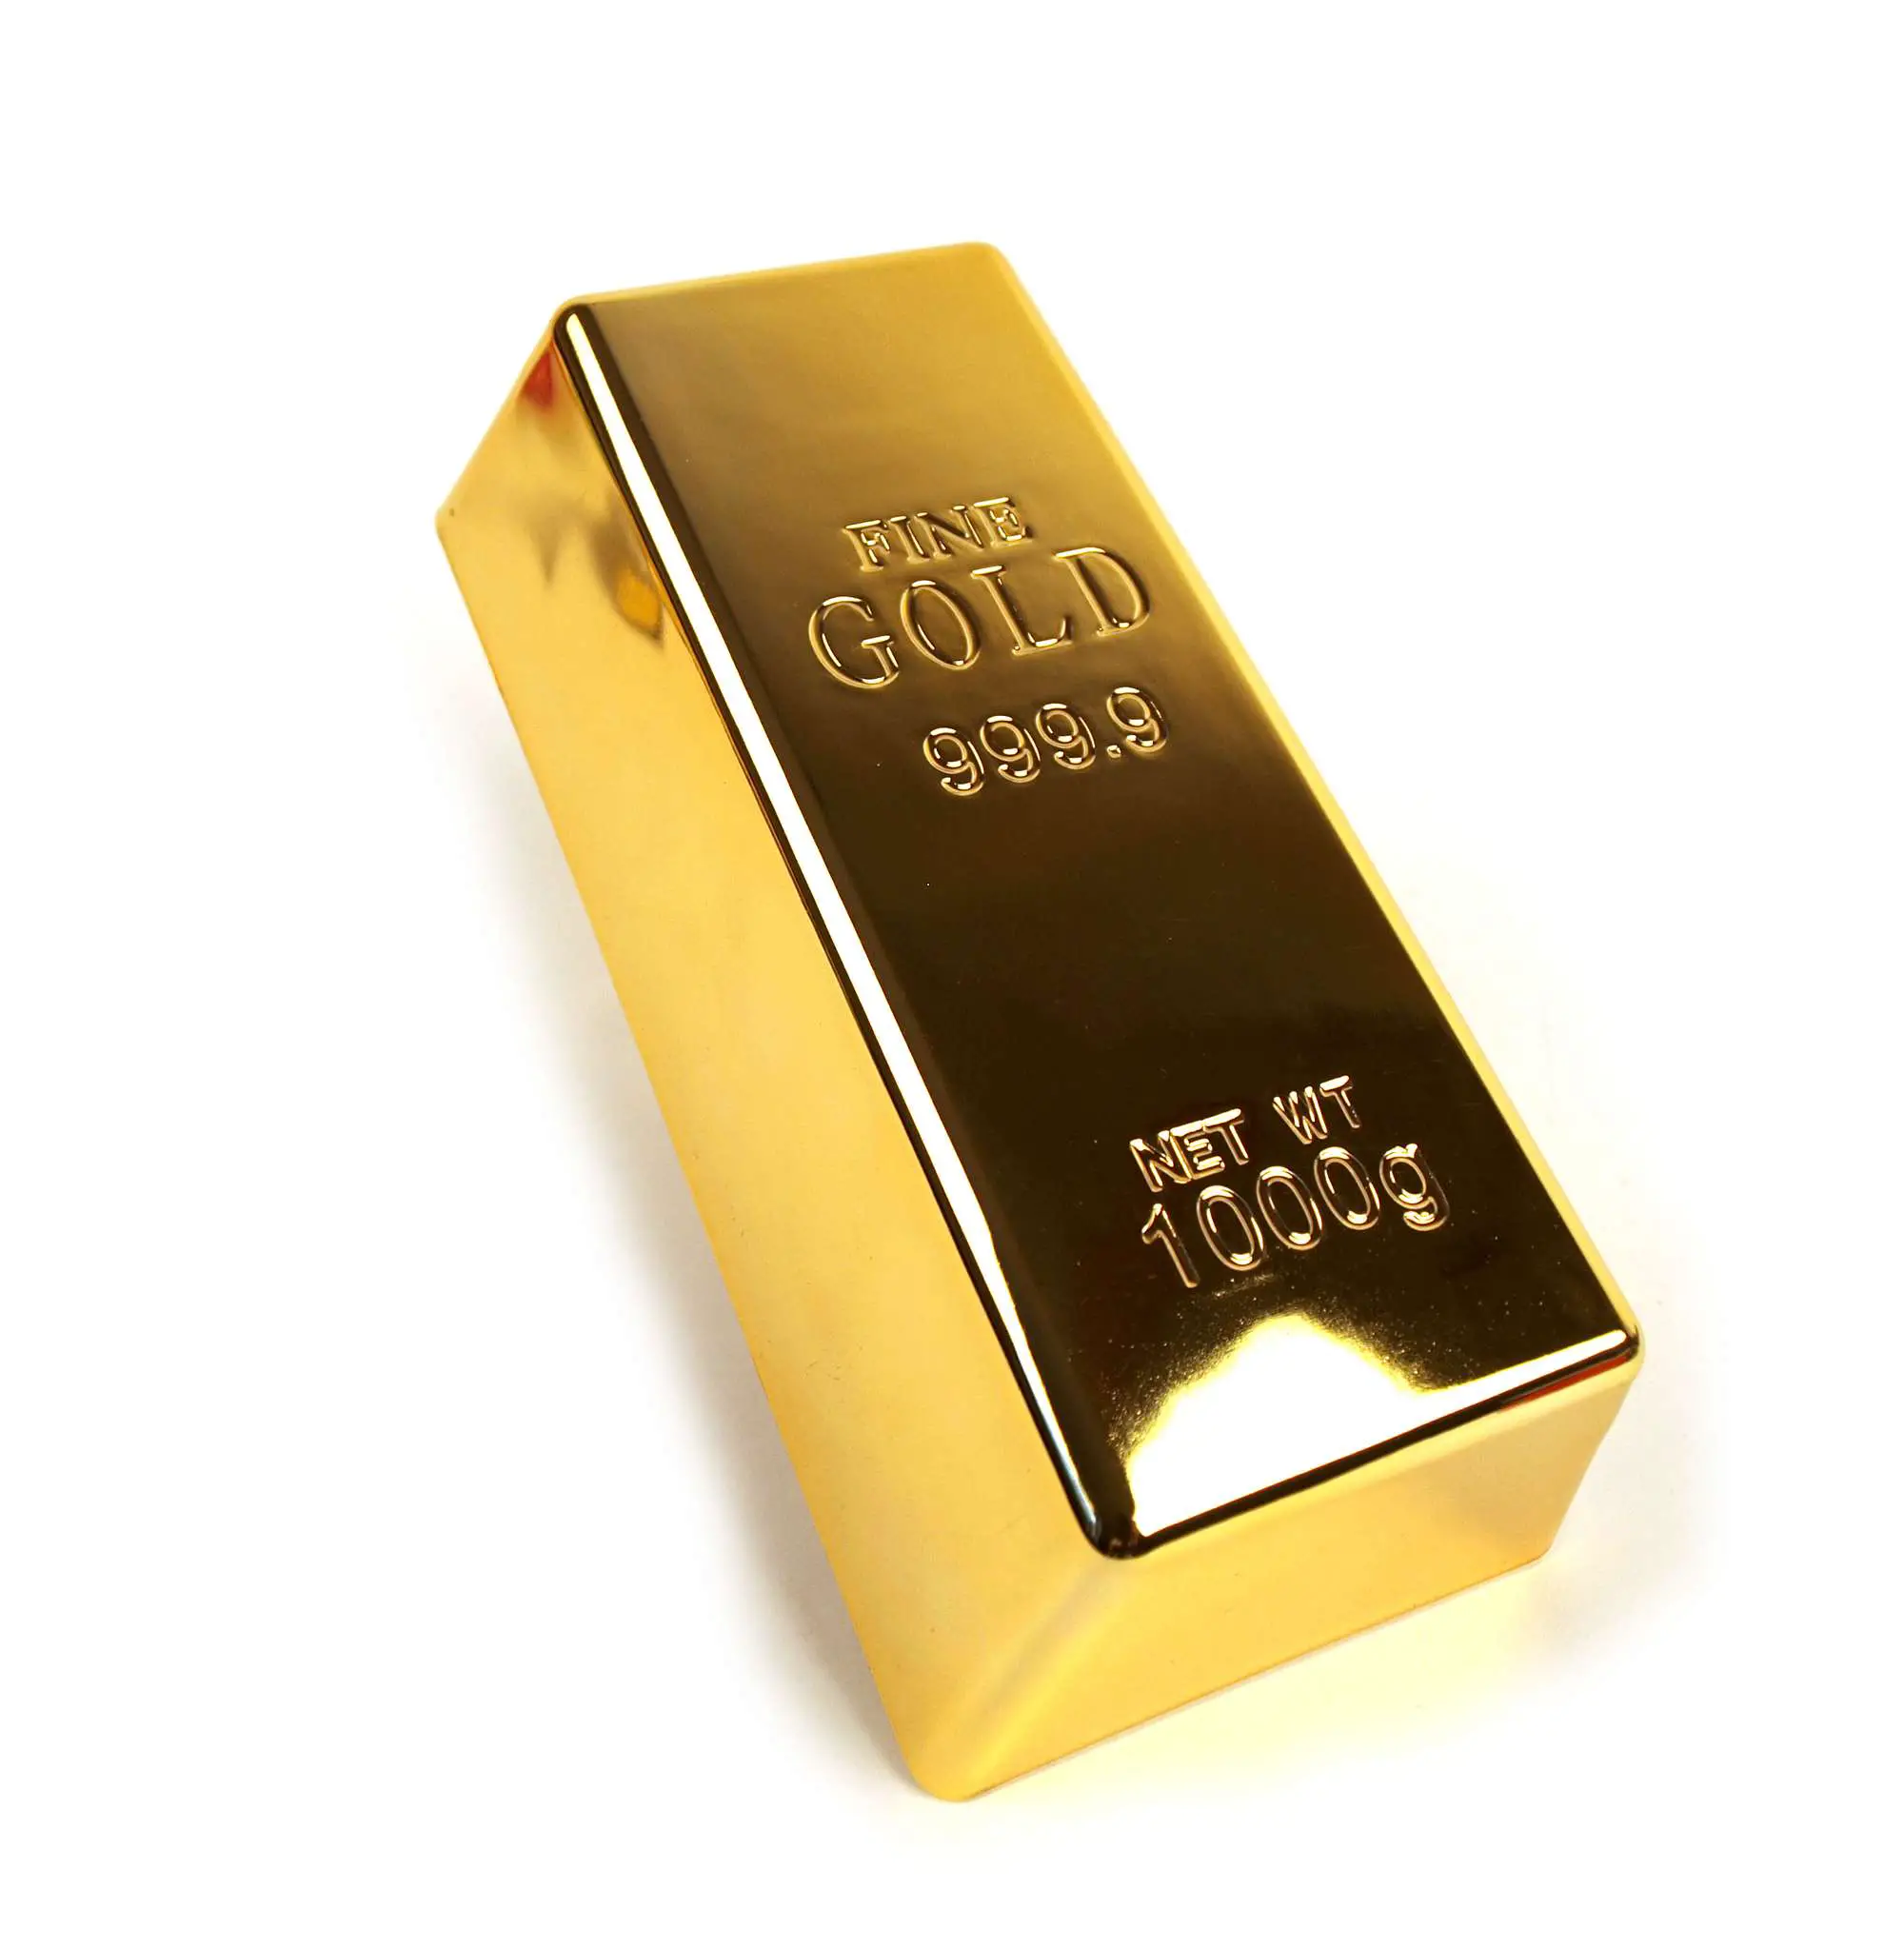 GOLD BAR Paperweight or Doorstop 1kg BULLION BAR